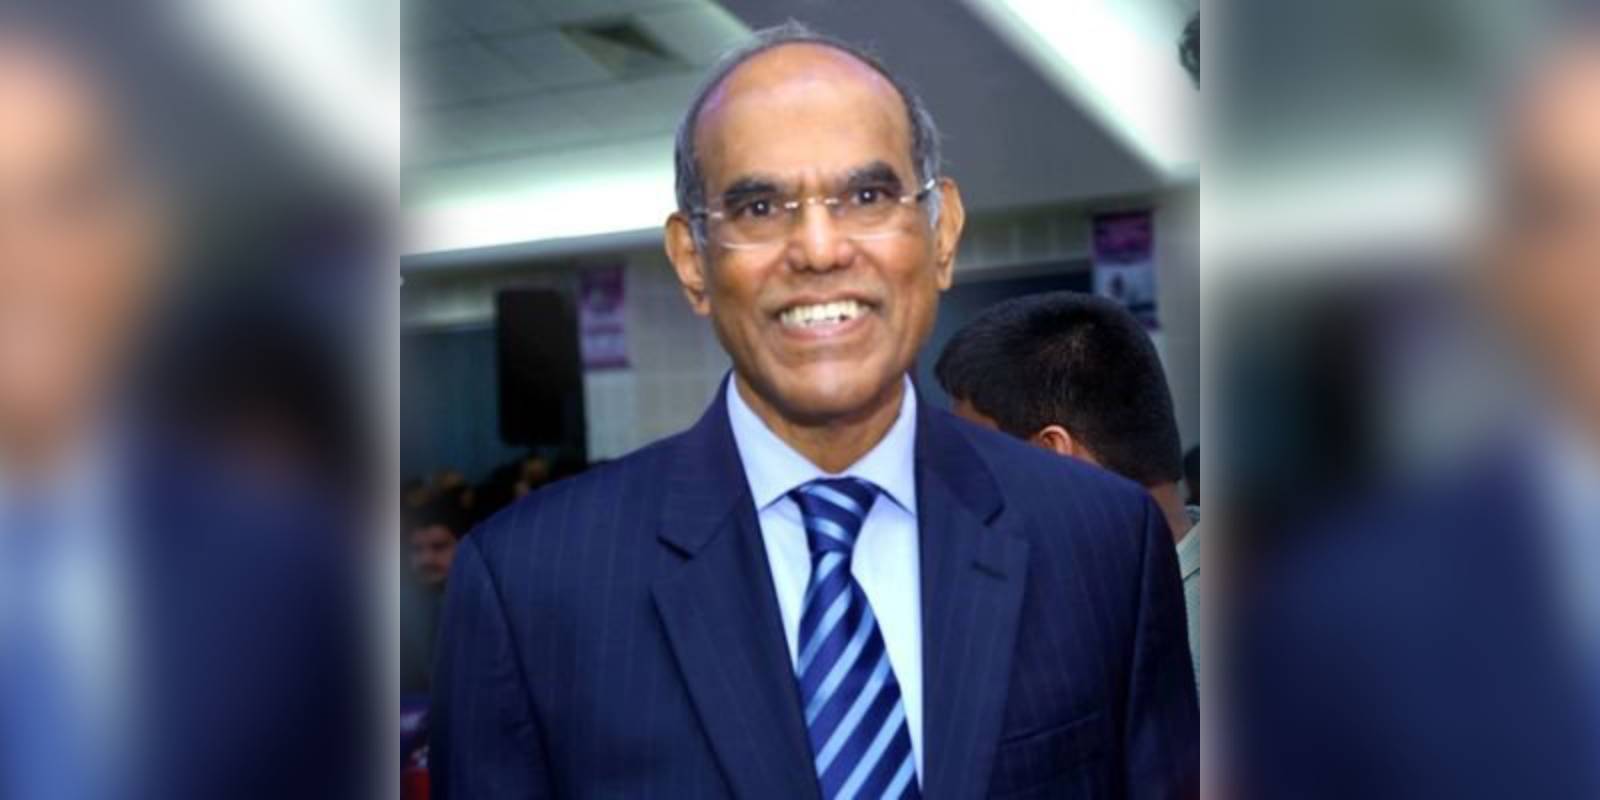 Former RBI governor D Subbarao